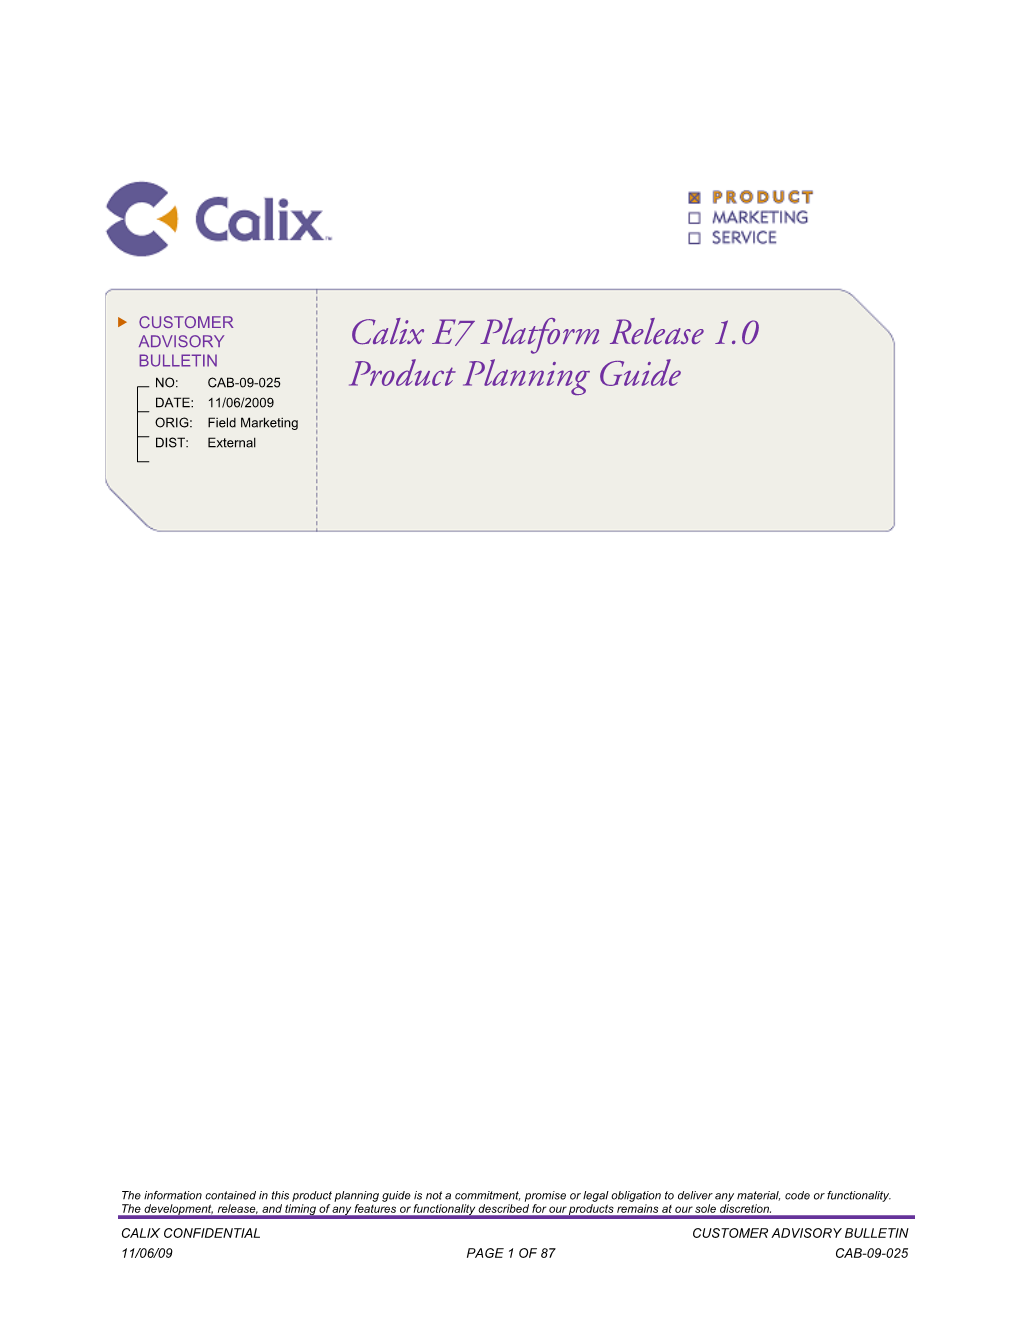 Calix E7 Platform Release 1.0 Product Planning Guide